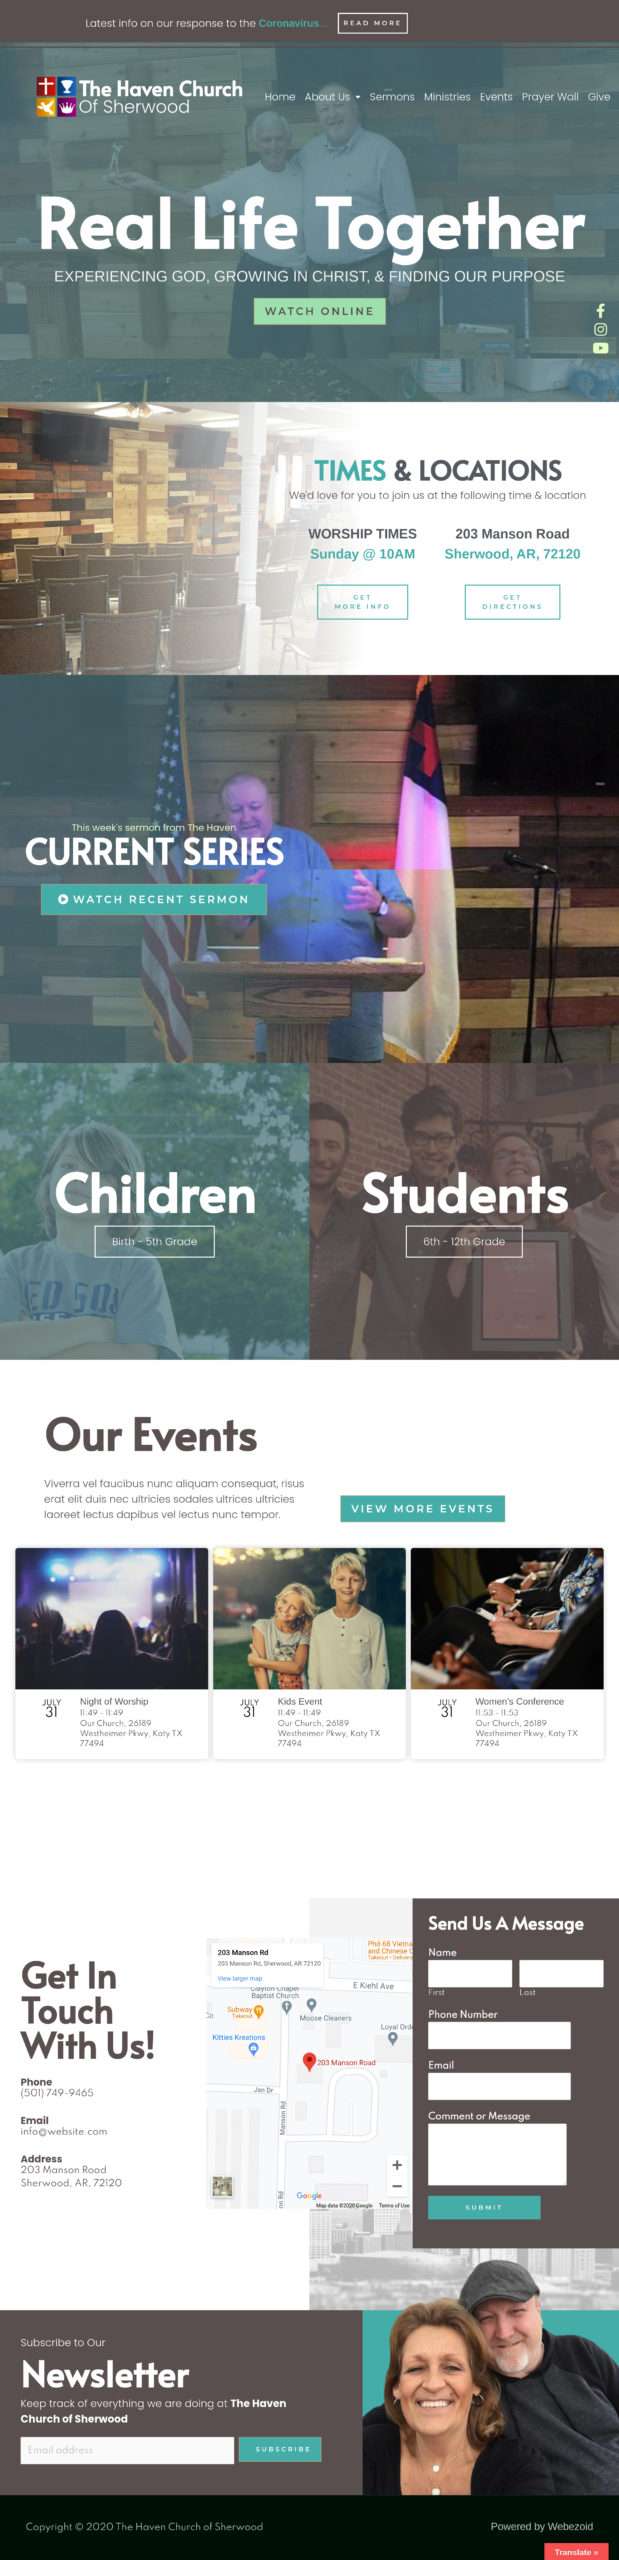 Church Website Examples